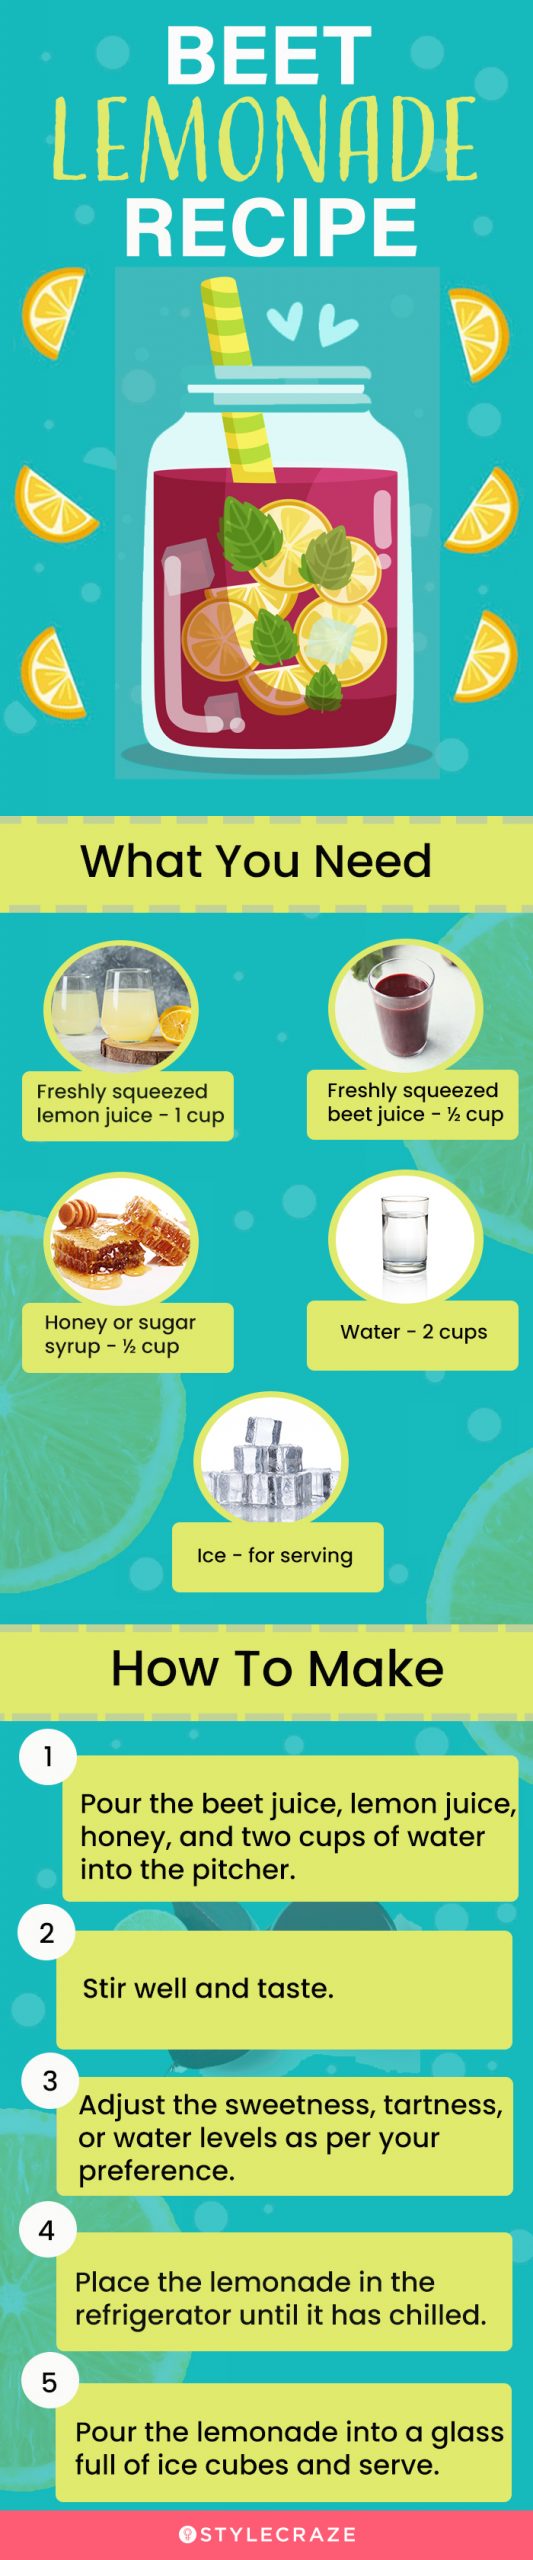 beetlemonade juice recipe (infographic)